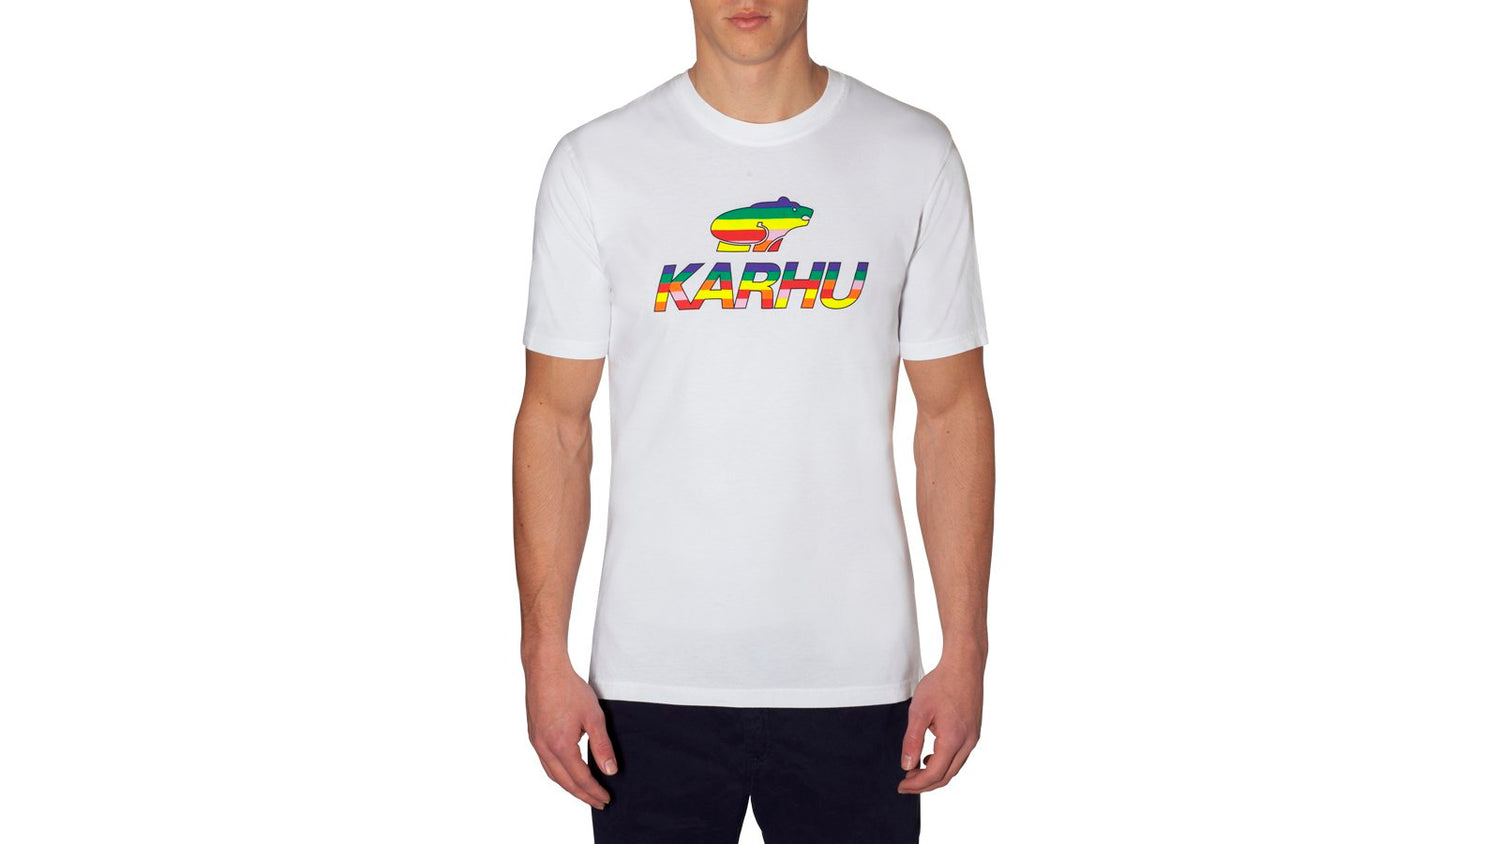 Karhu team college tshirt white multi colour on body